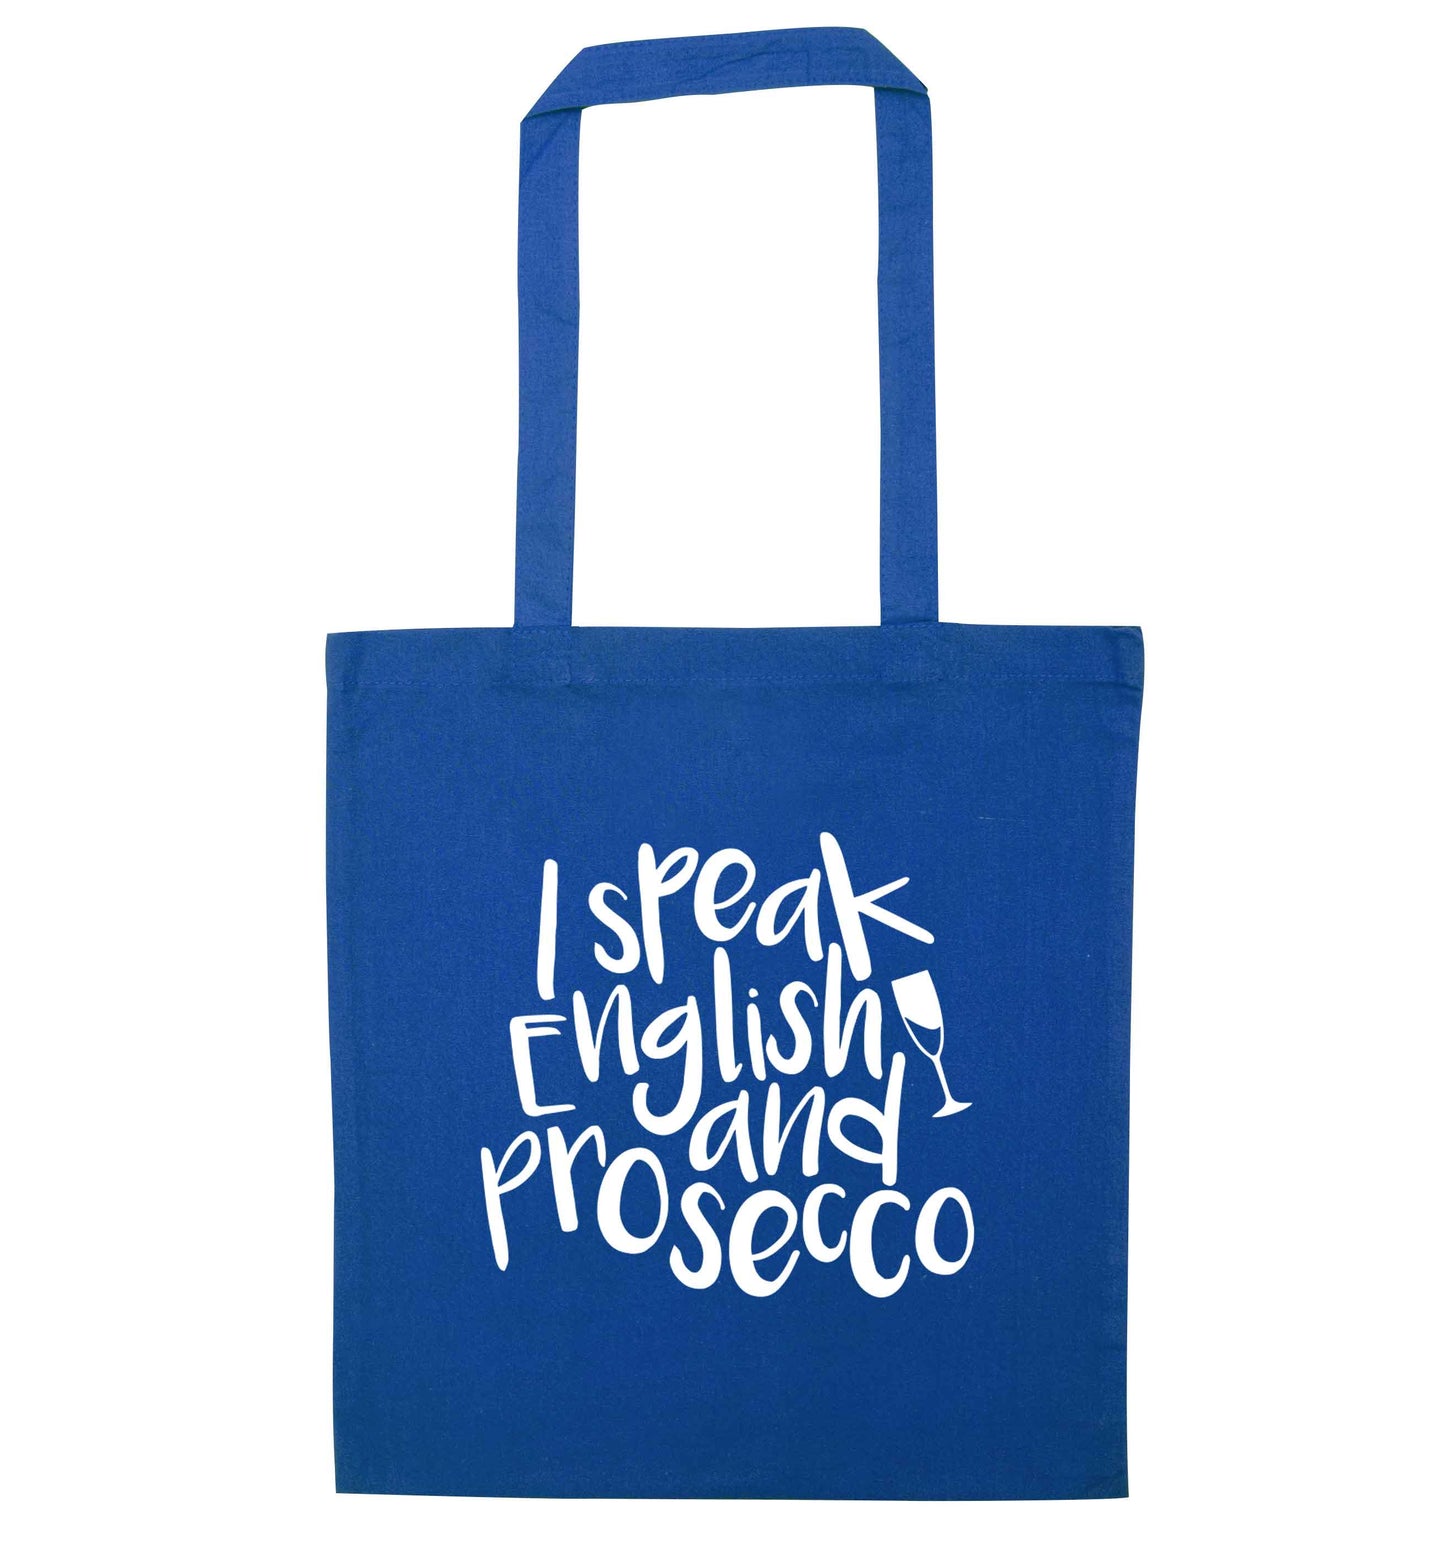 I speak English and prosecco blue tote bag